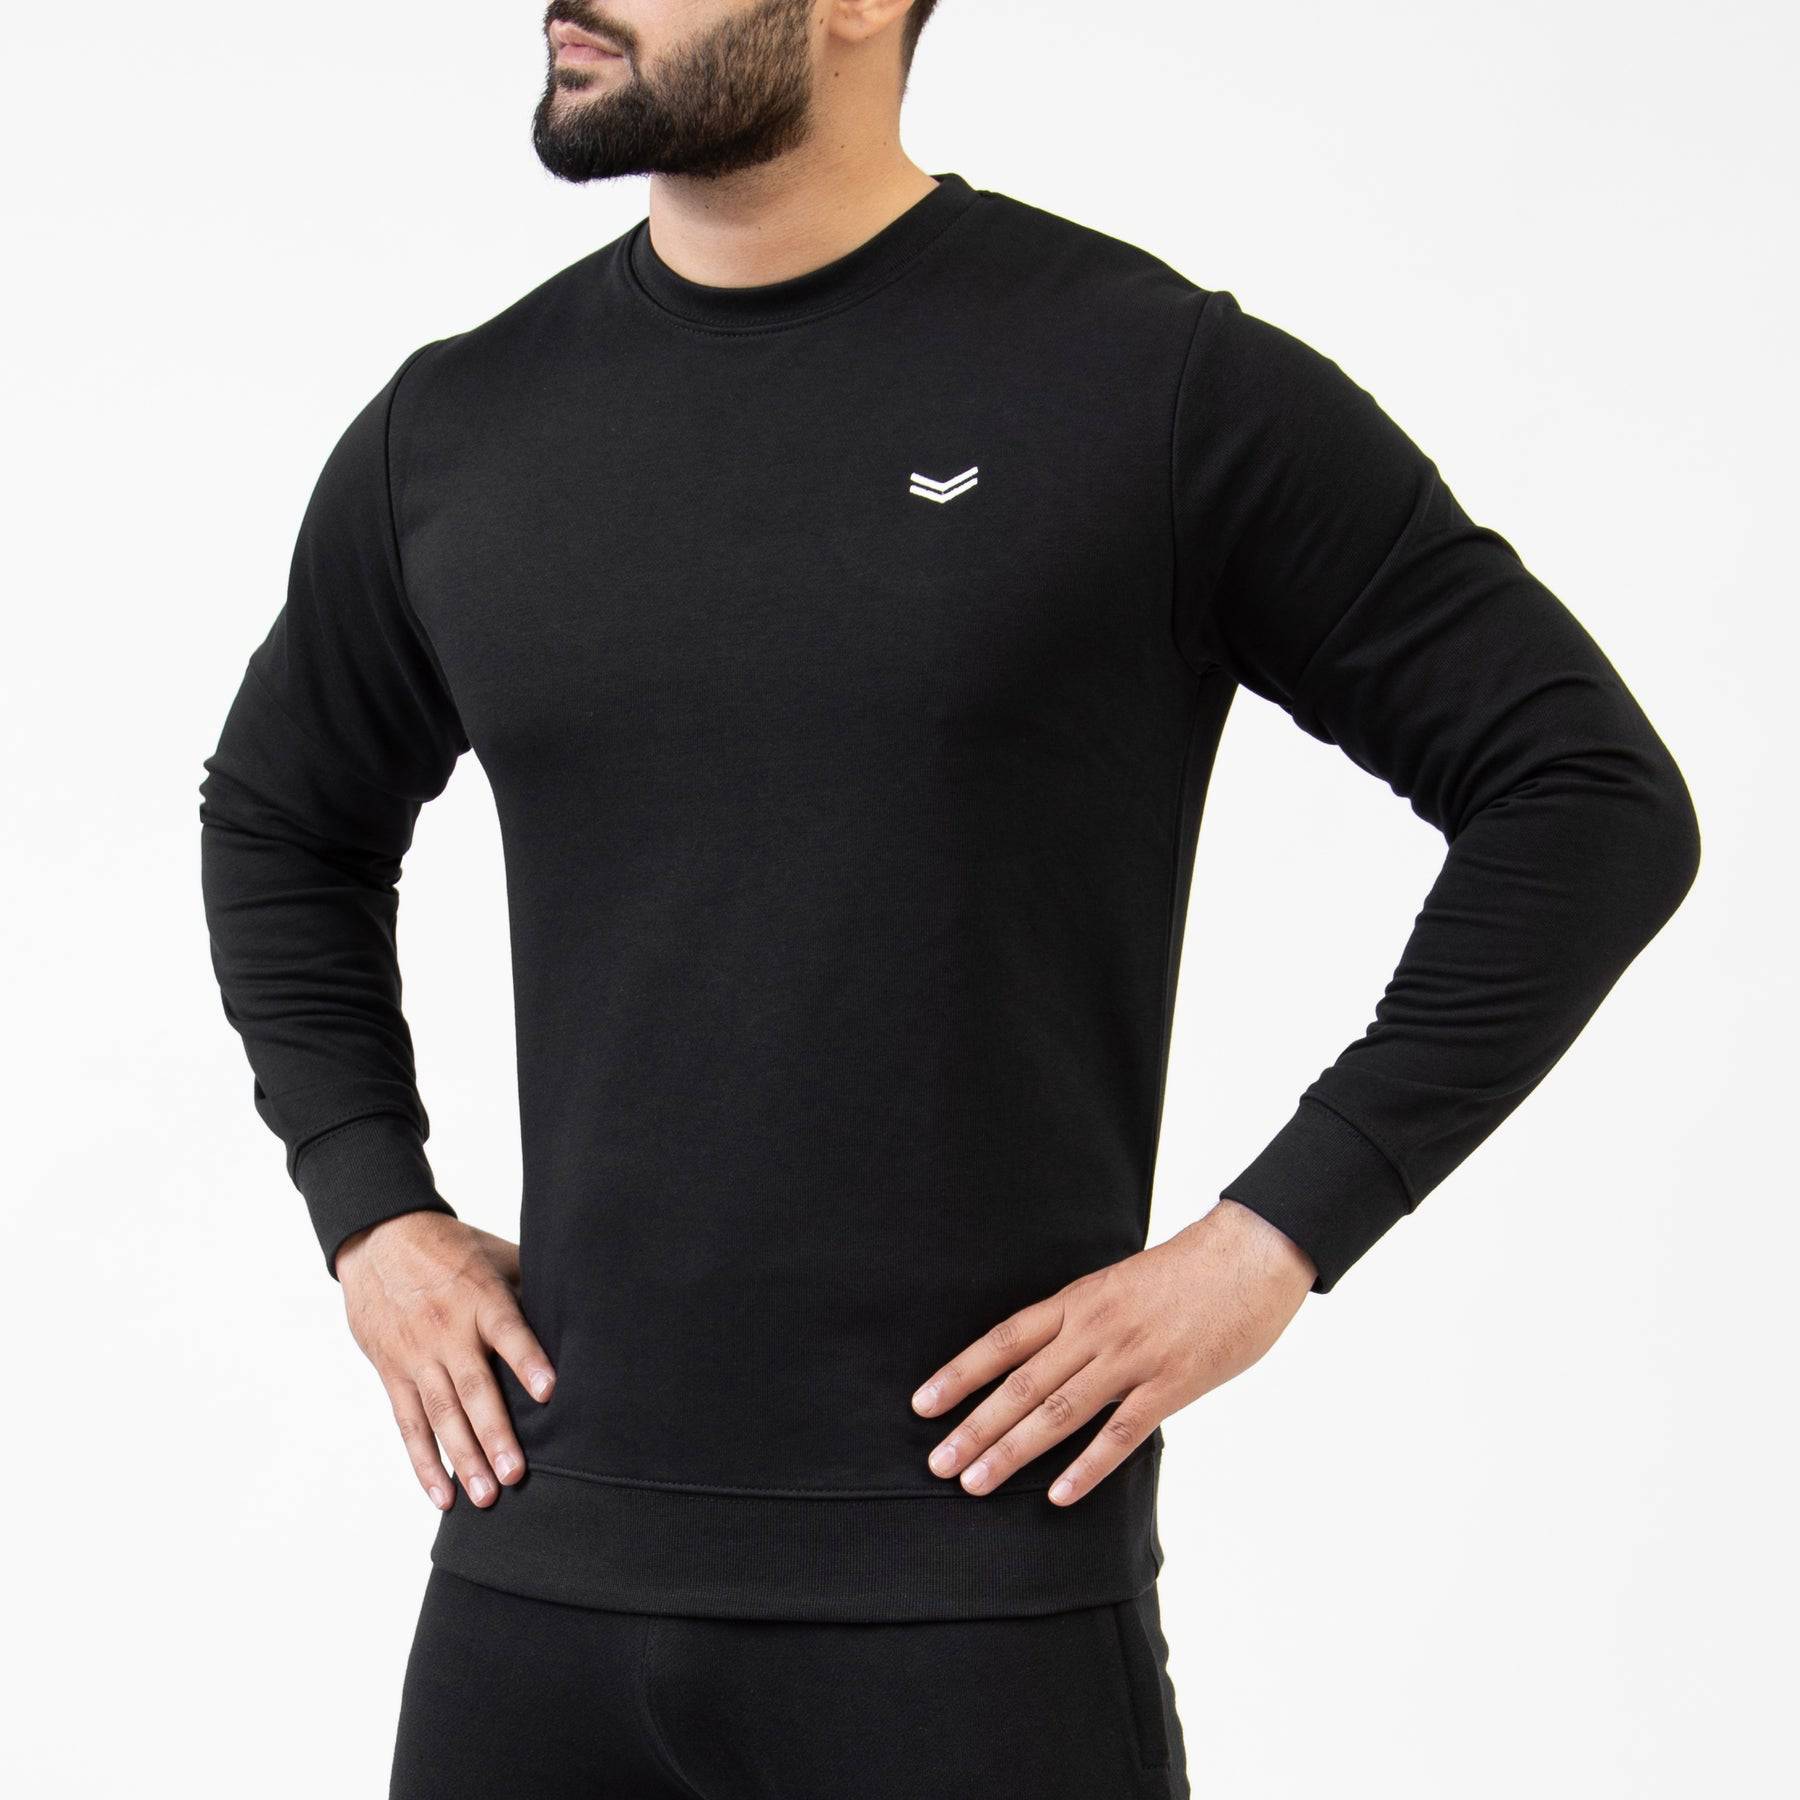 Solid Black Sweatshirt - Valetica Sports